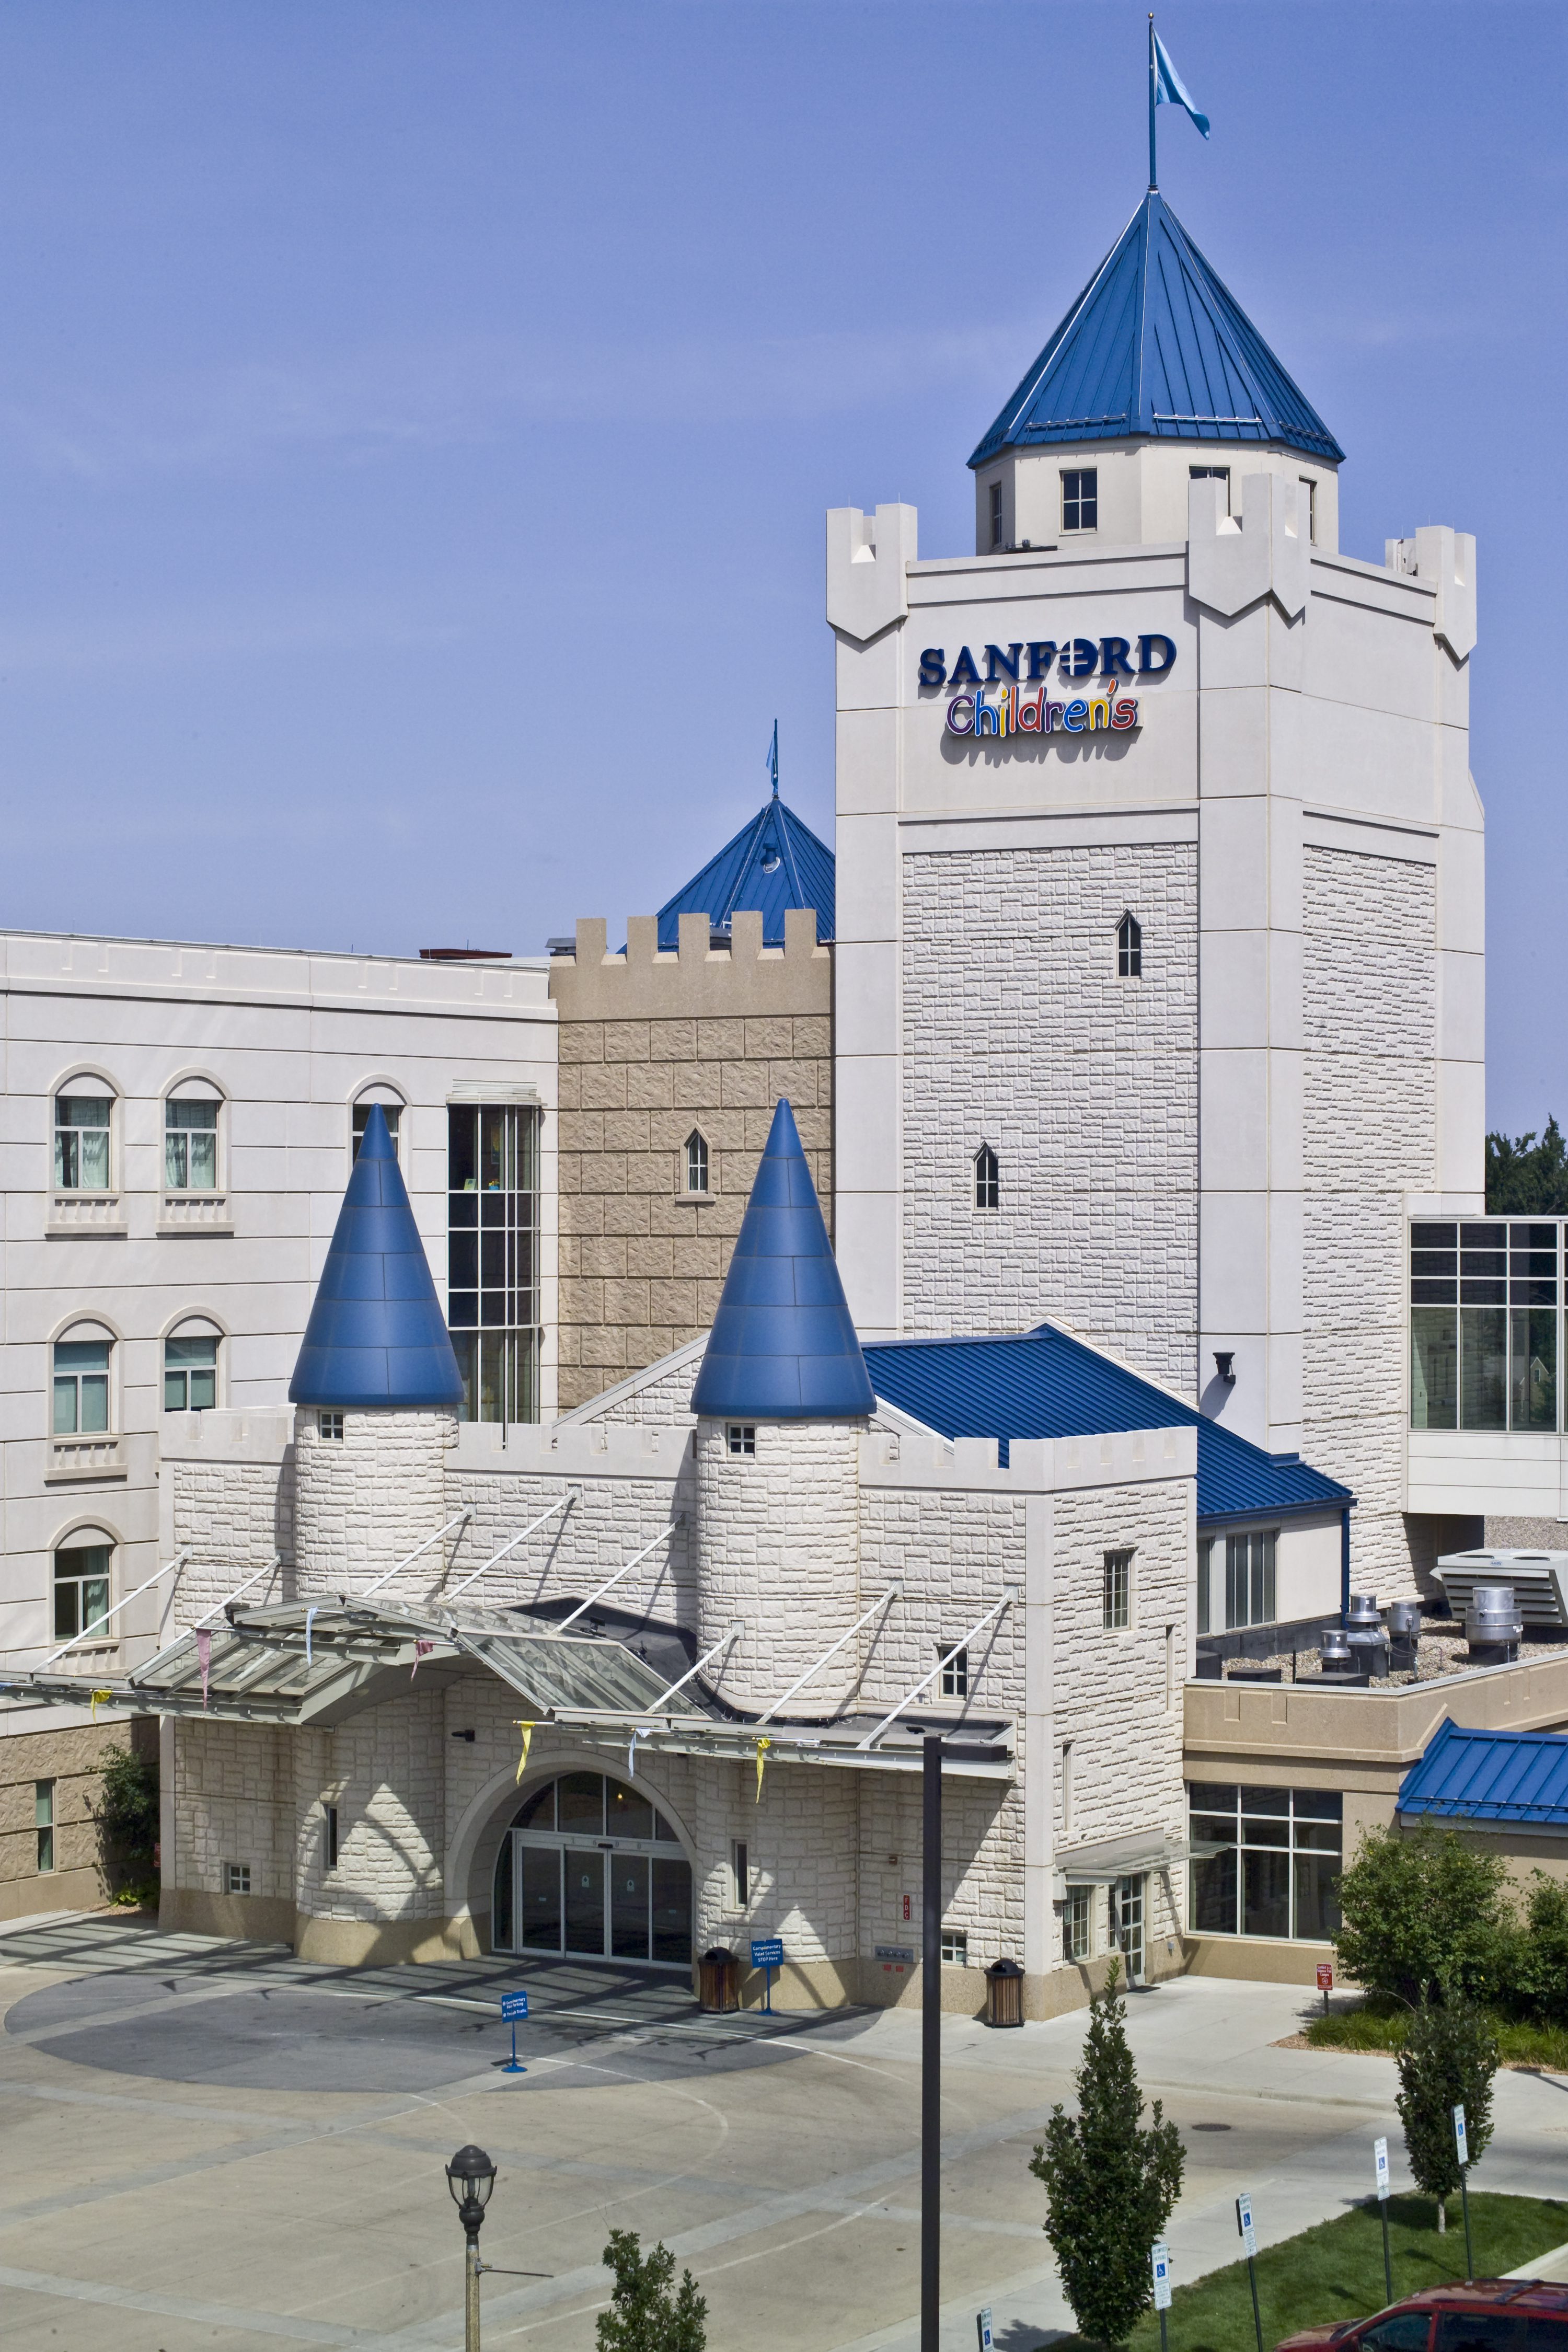 Sanford Childrens Hospital